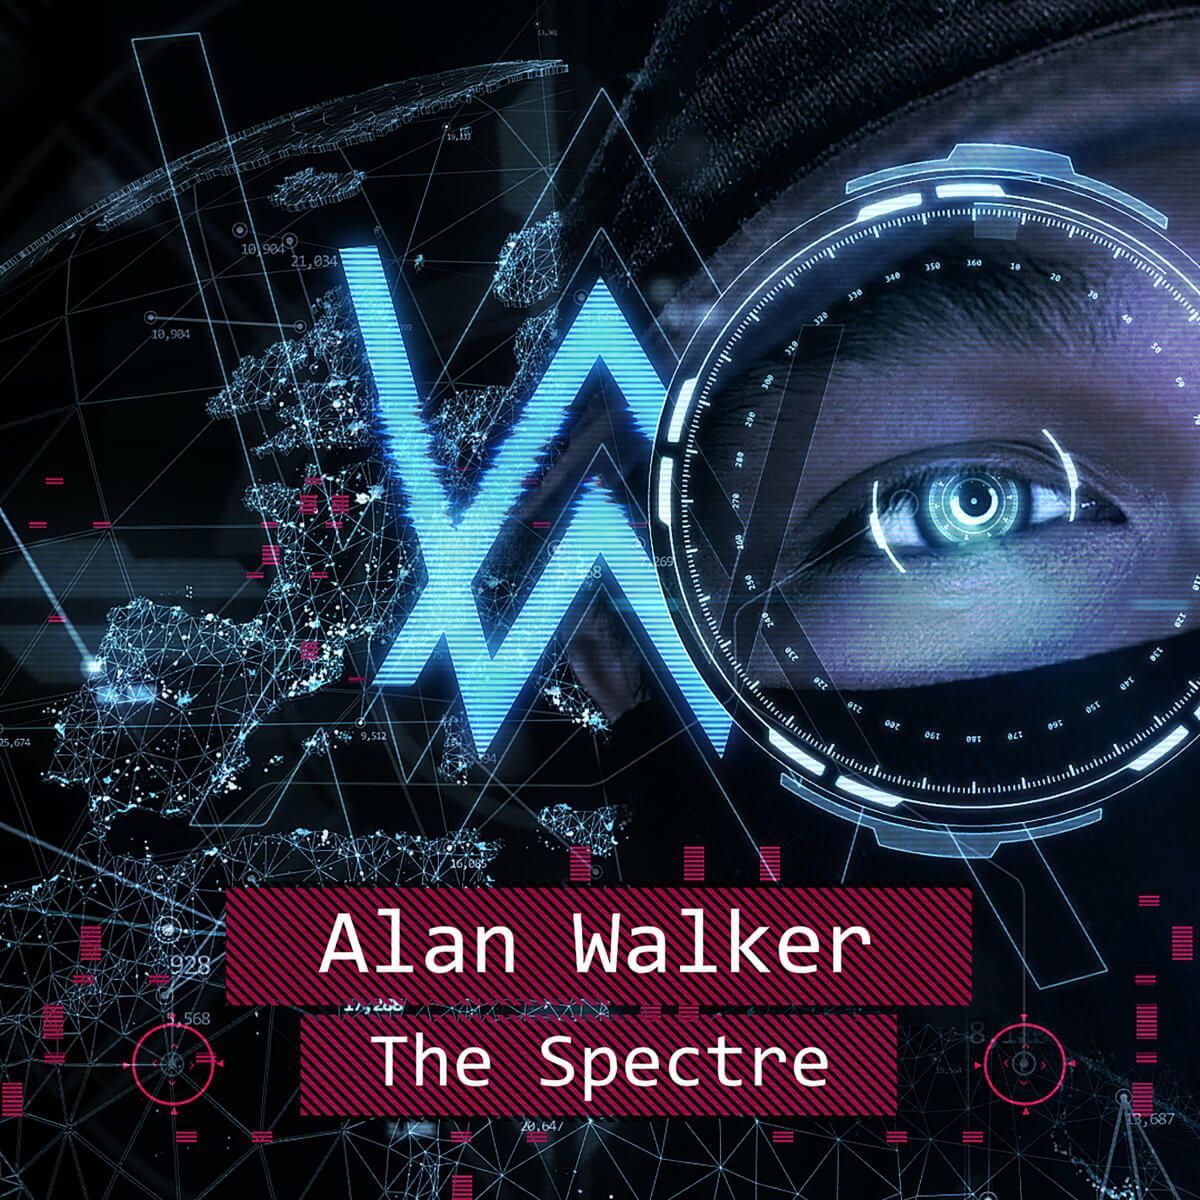 The Spectre #alanwalker #thespectre. アヴィーチー, アラン